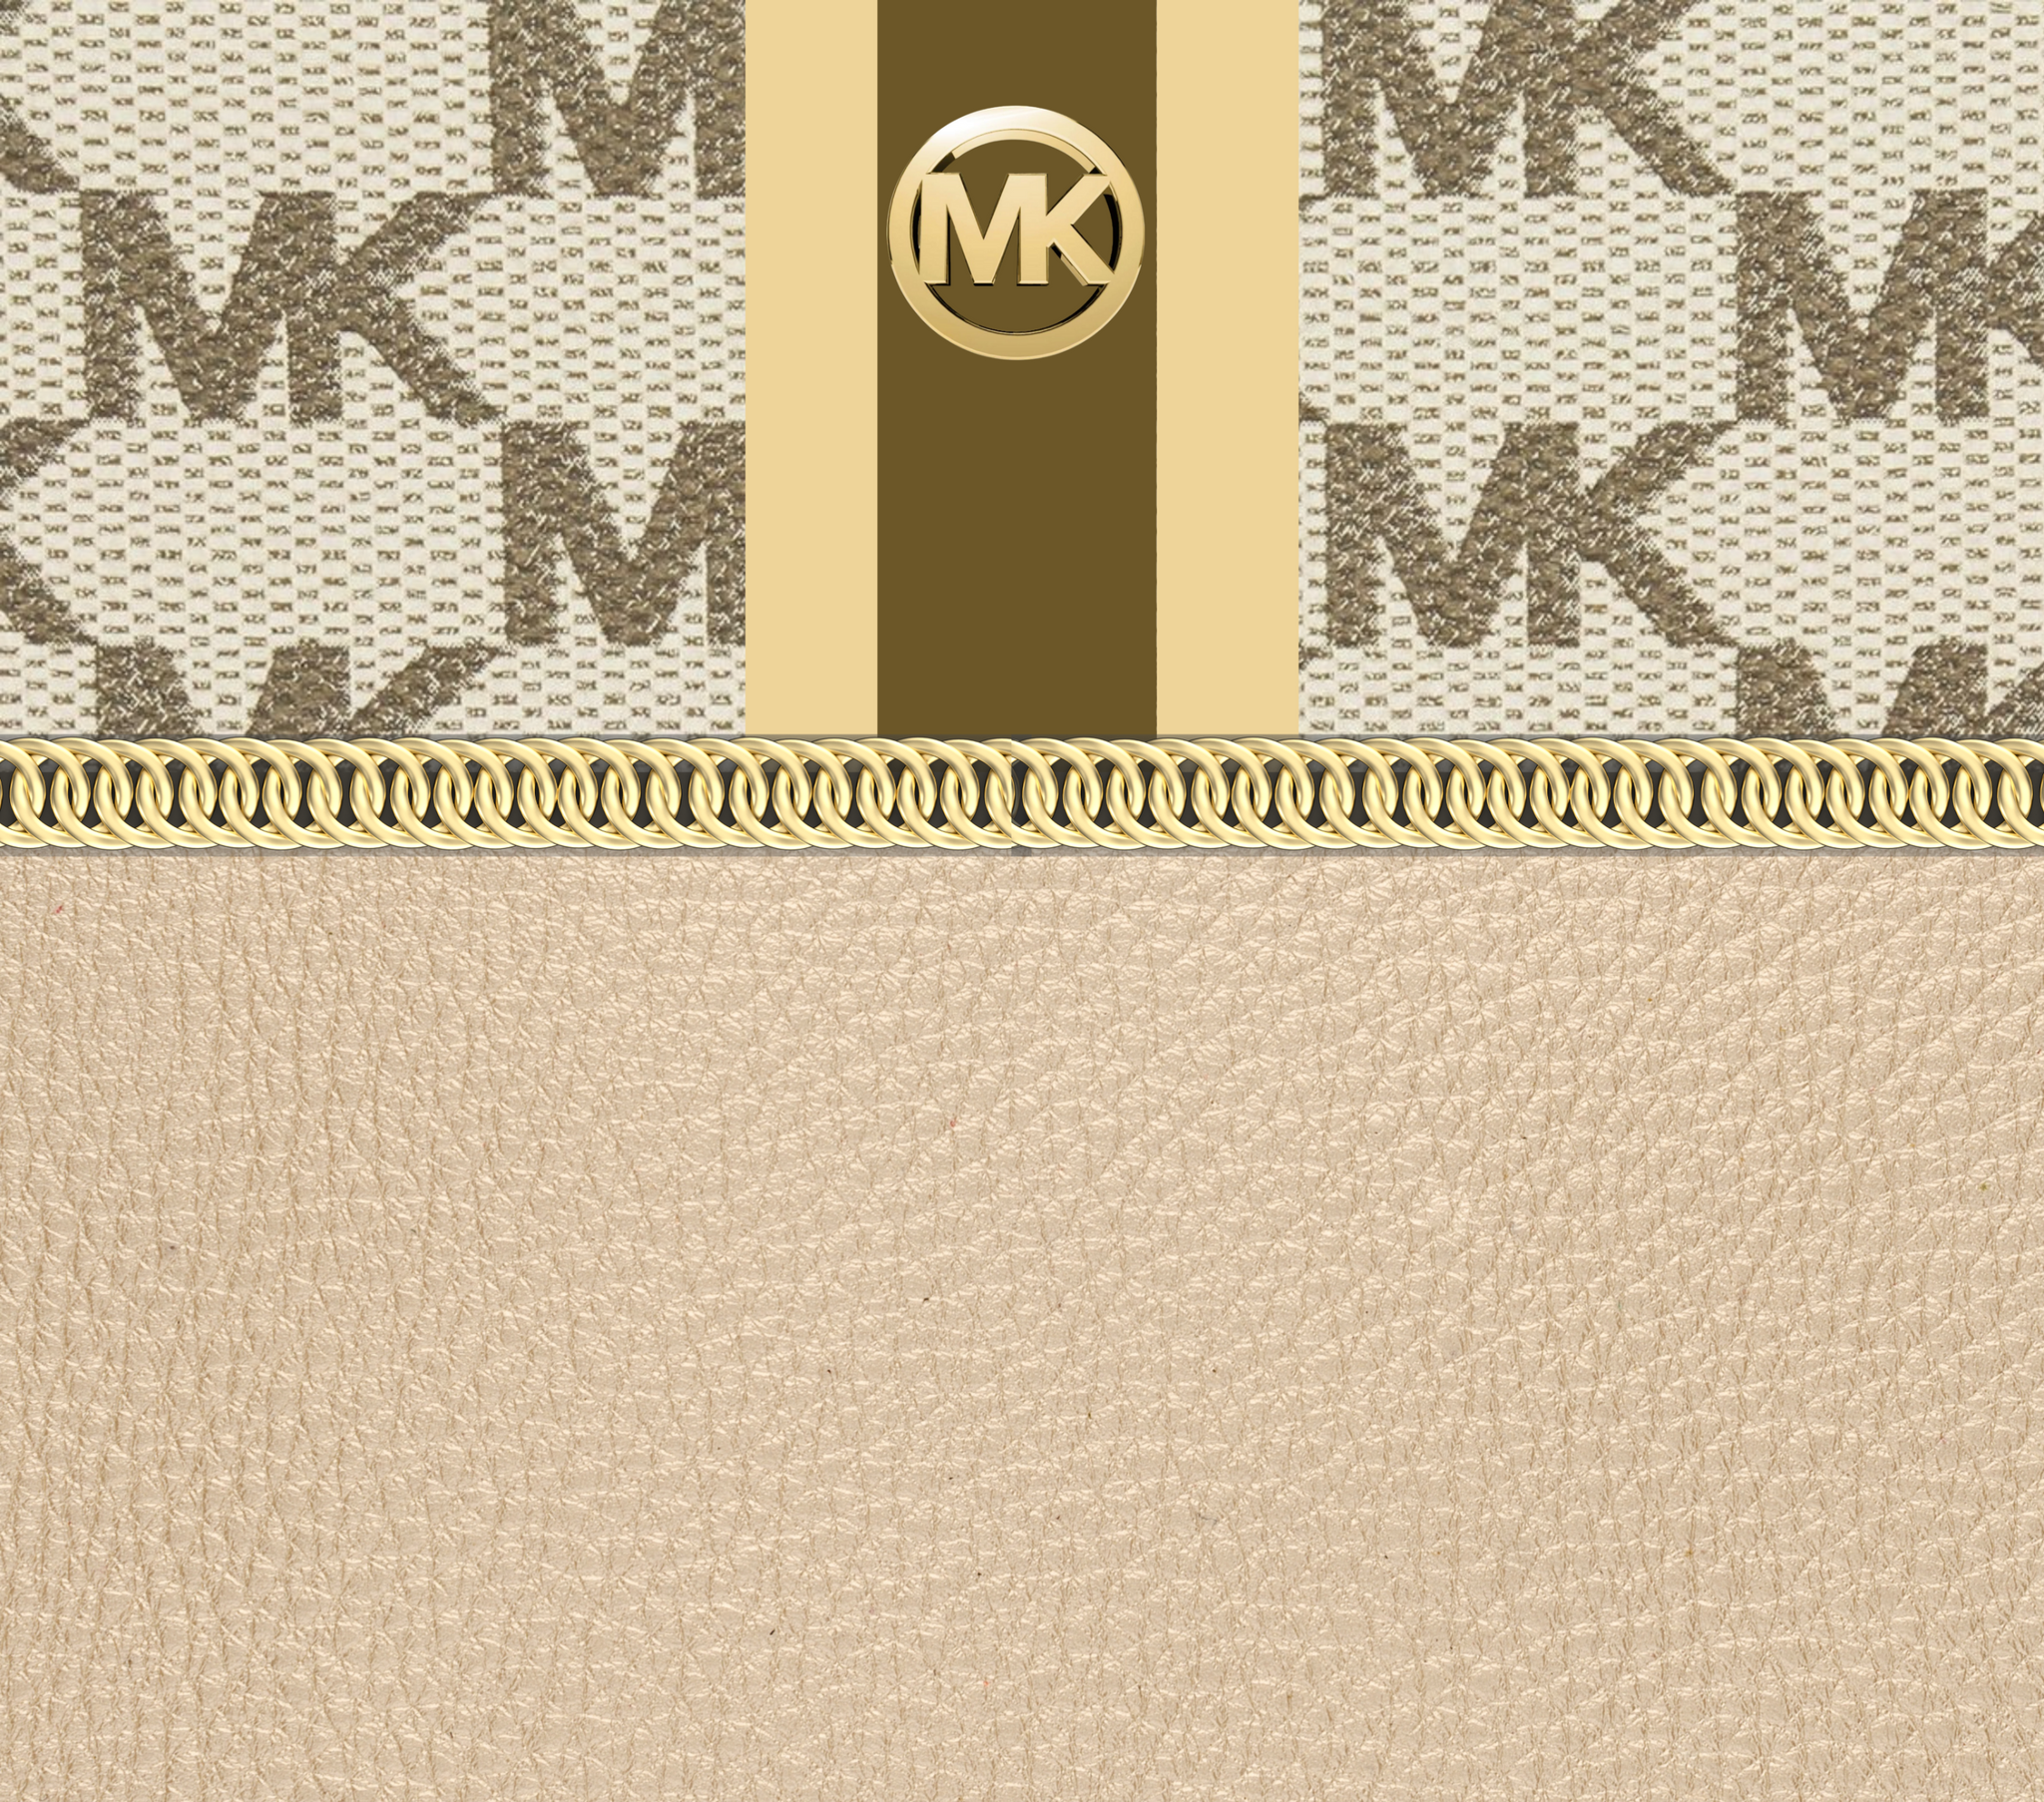 MK purse handle tumbler – Designs By Us 2021